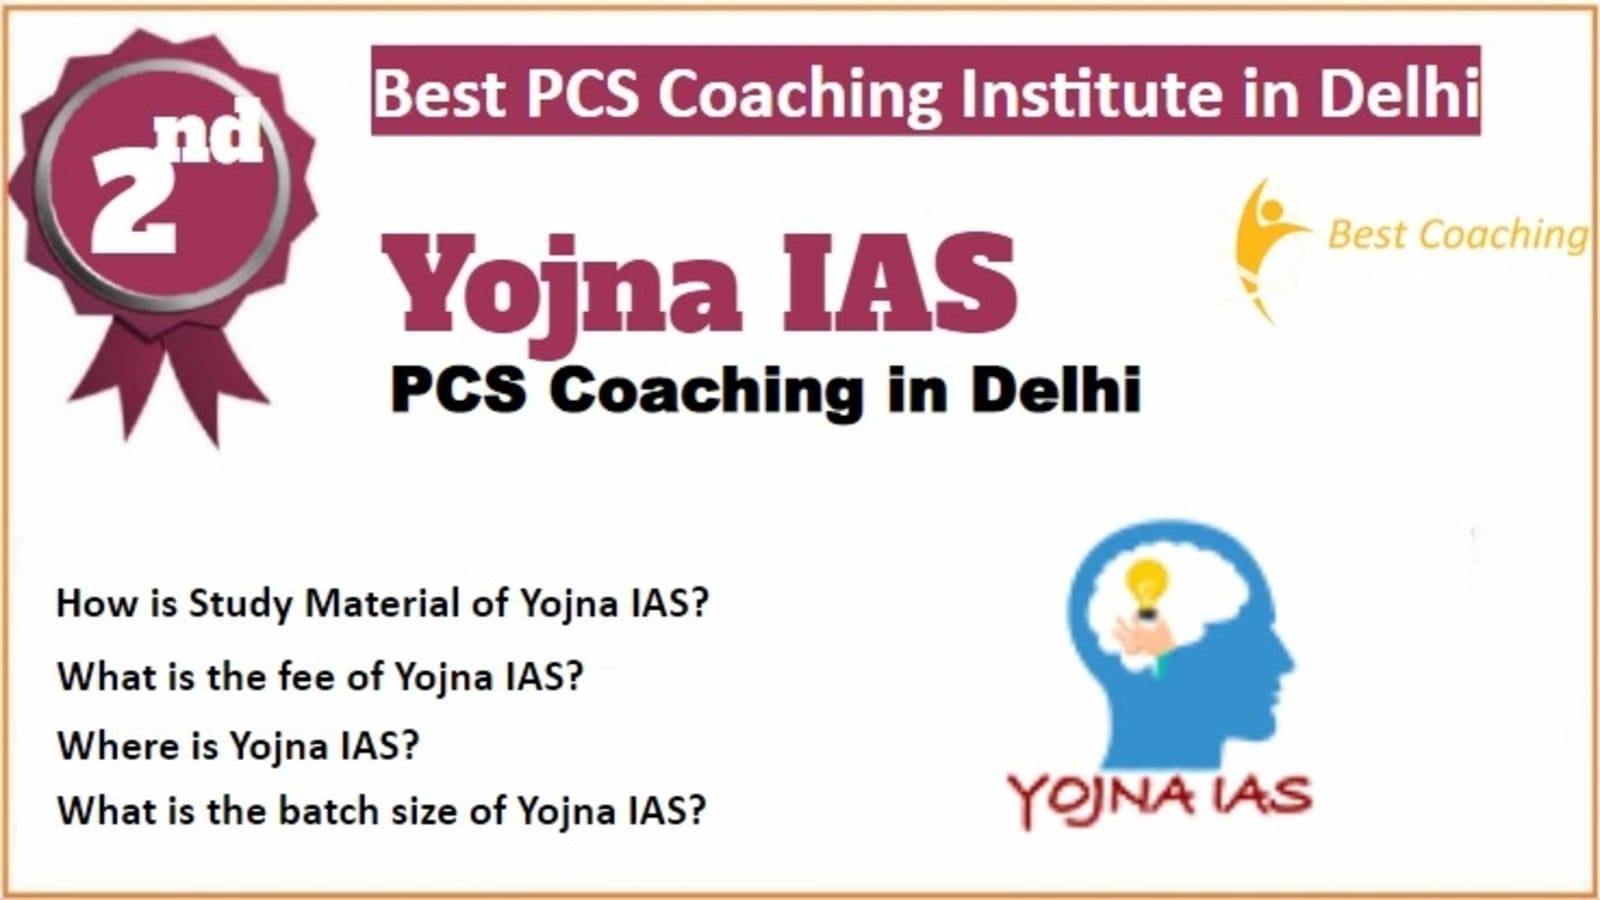 Rank 2 Best PCS Coaching in Delhi